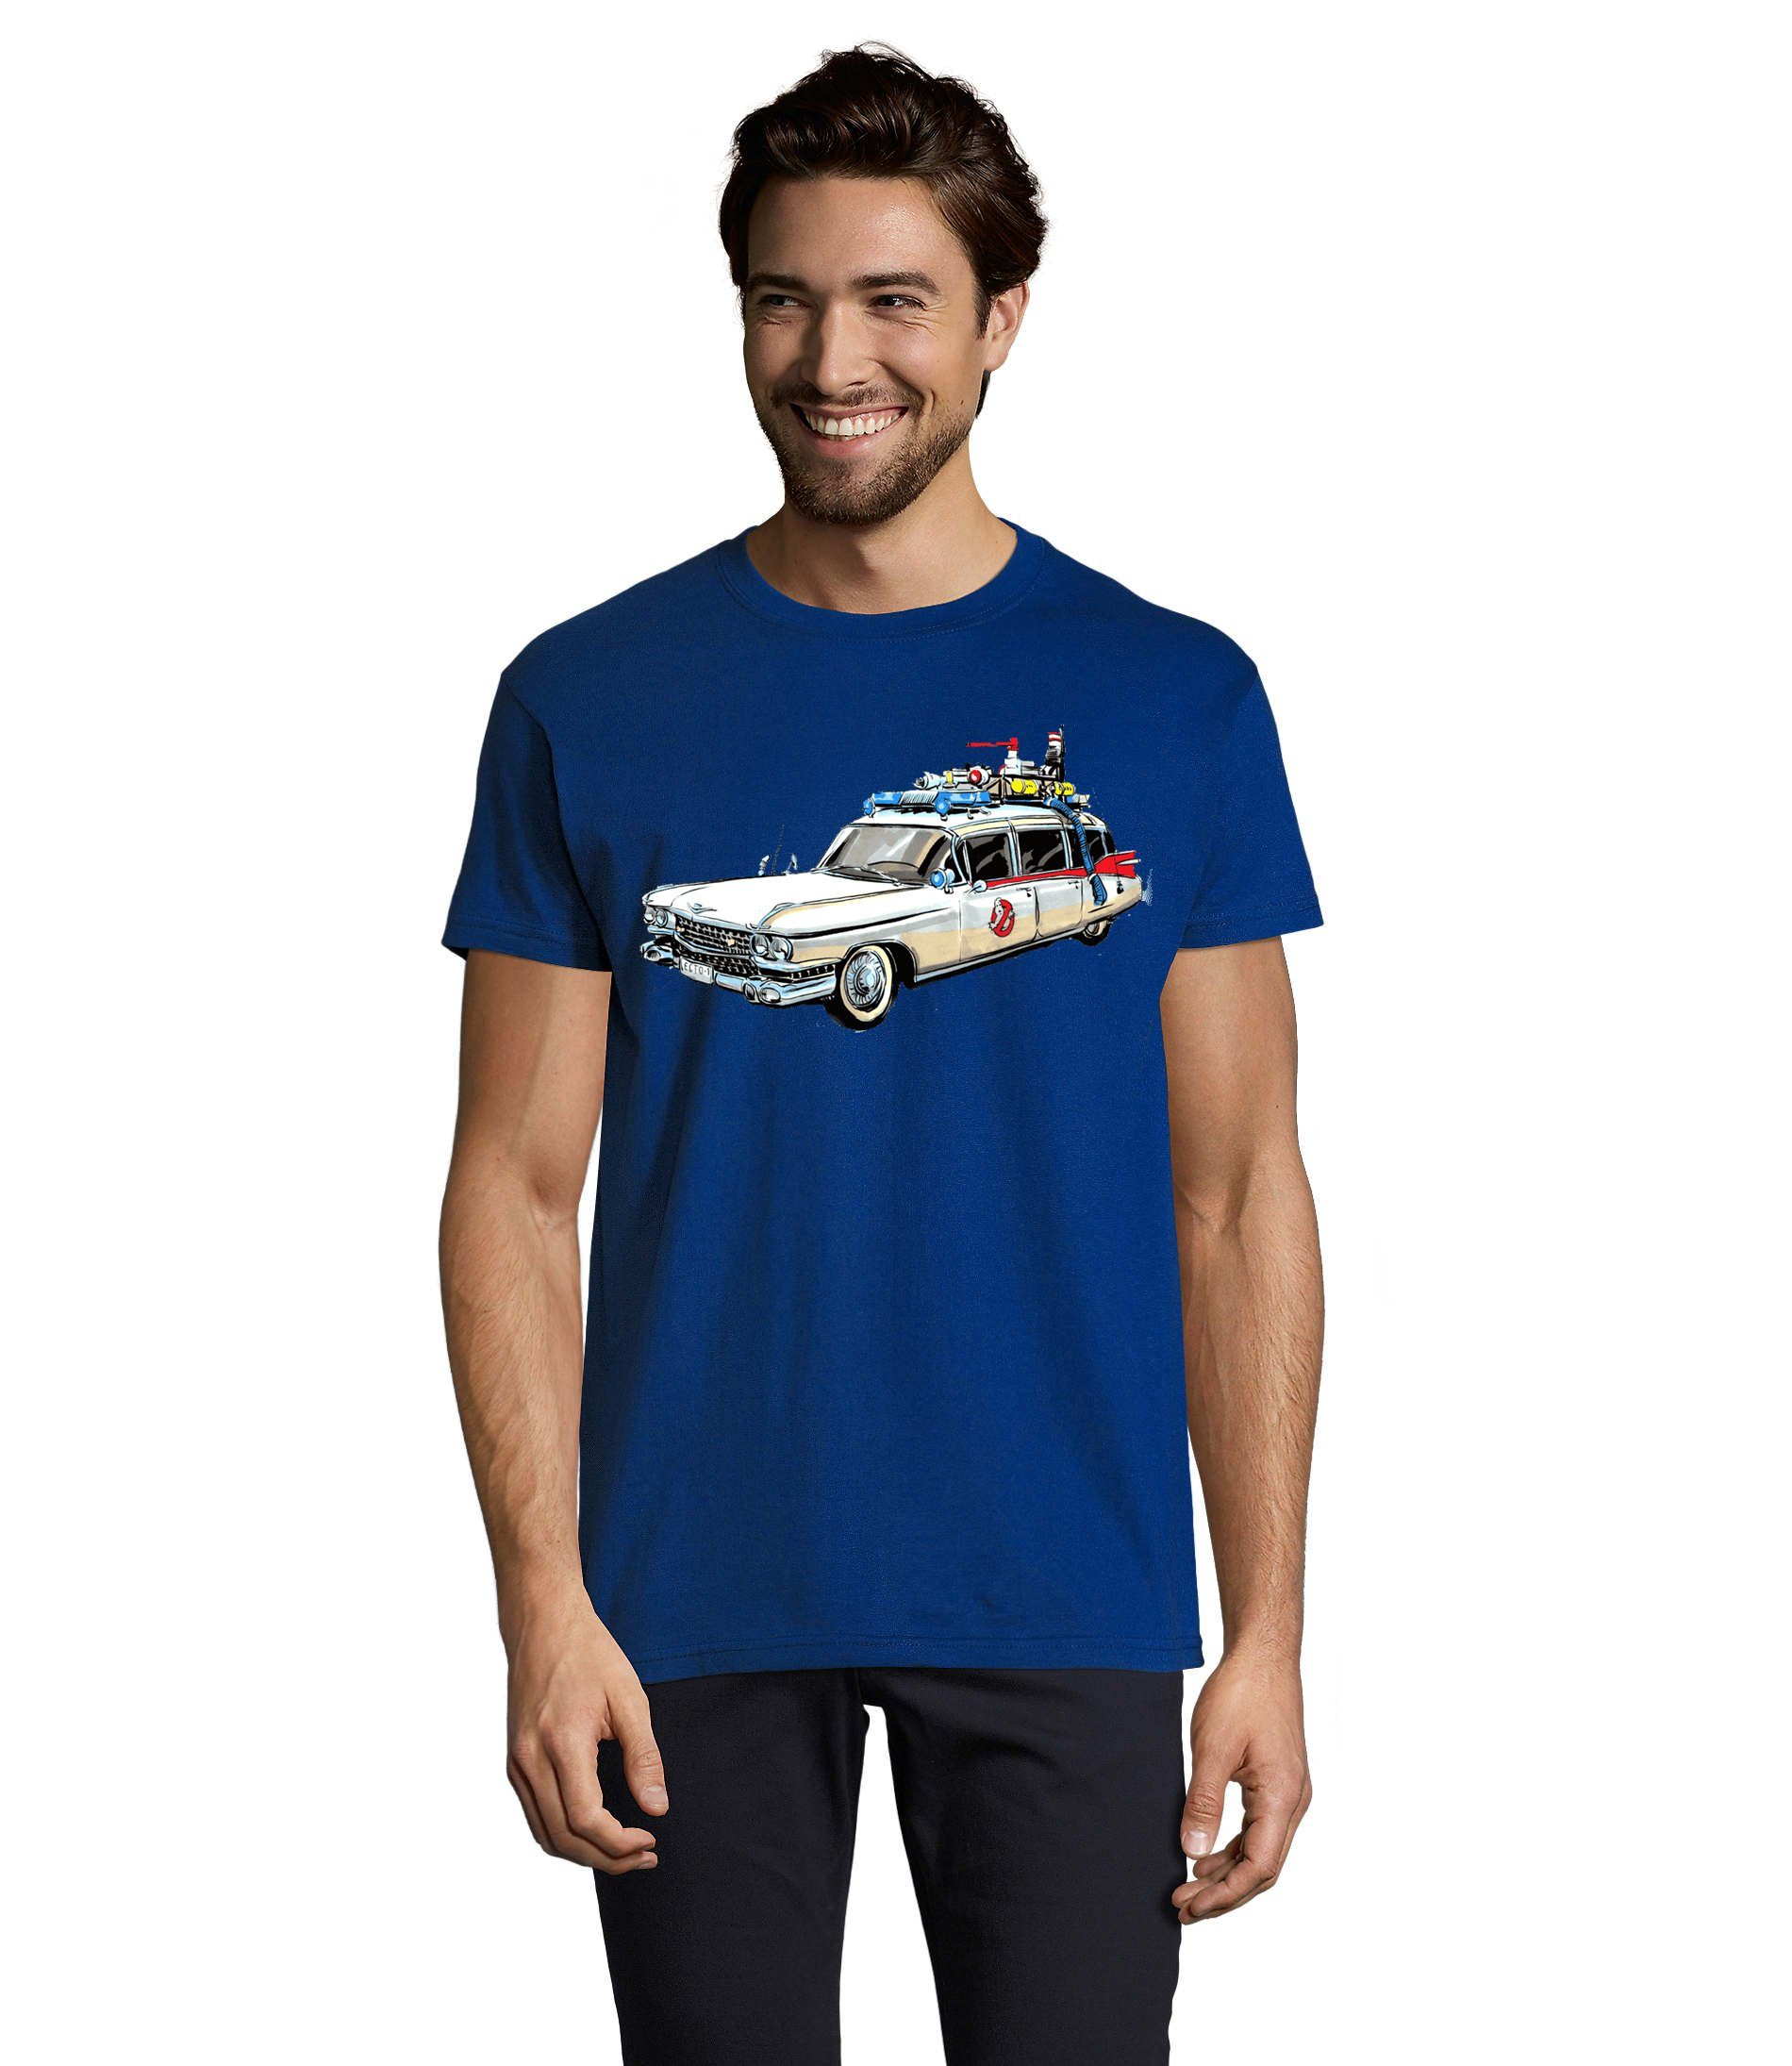 Ghostbusters Brownie Ghost T-Shirt Blondie Auto Geister & Herren Blau Film Geisterjäger Cars